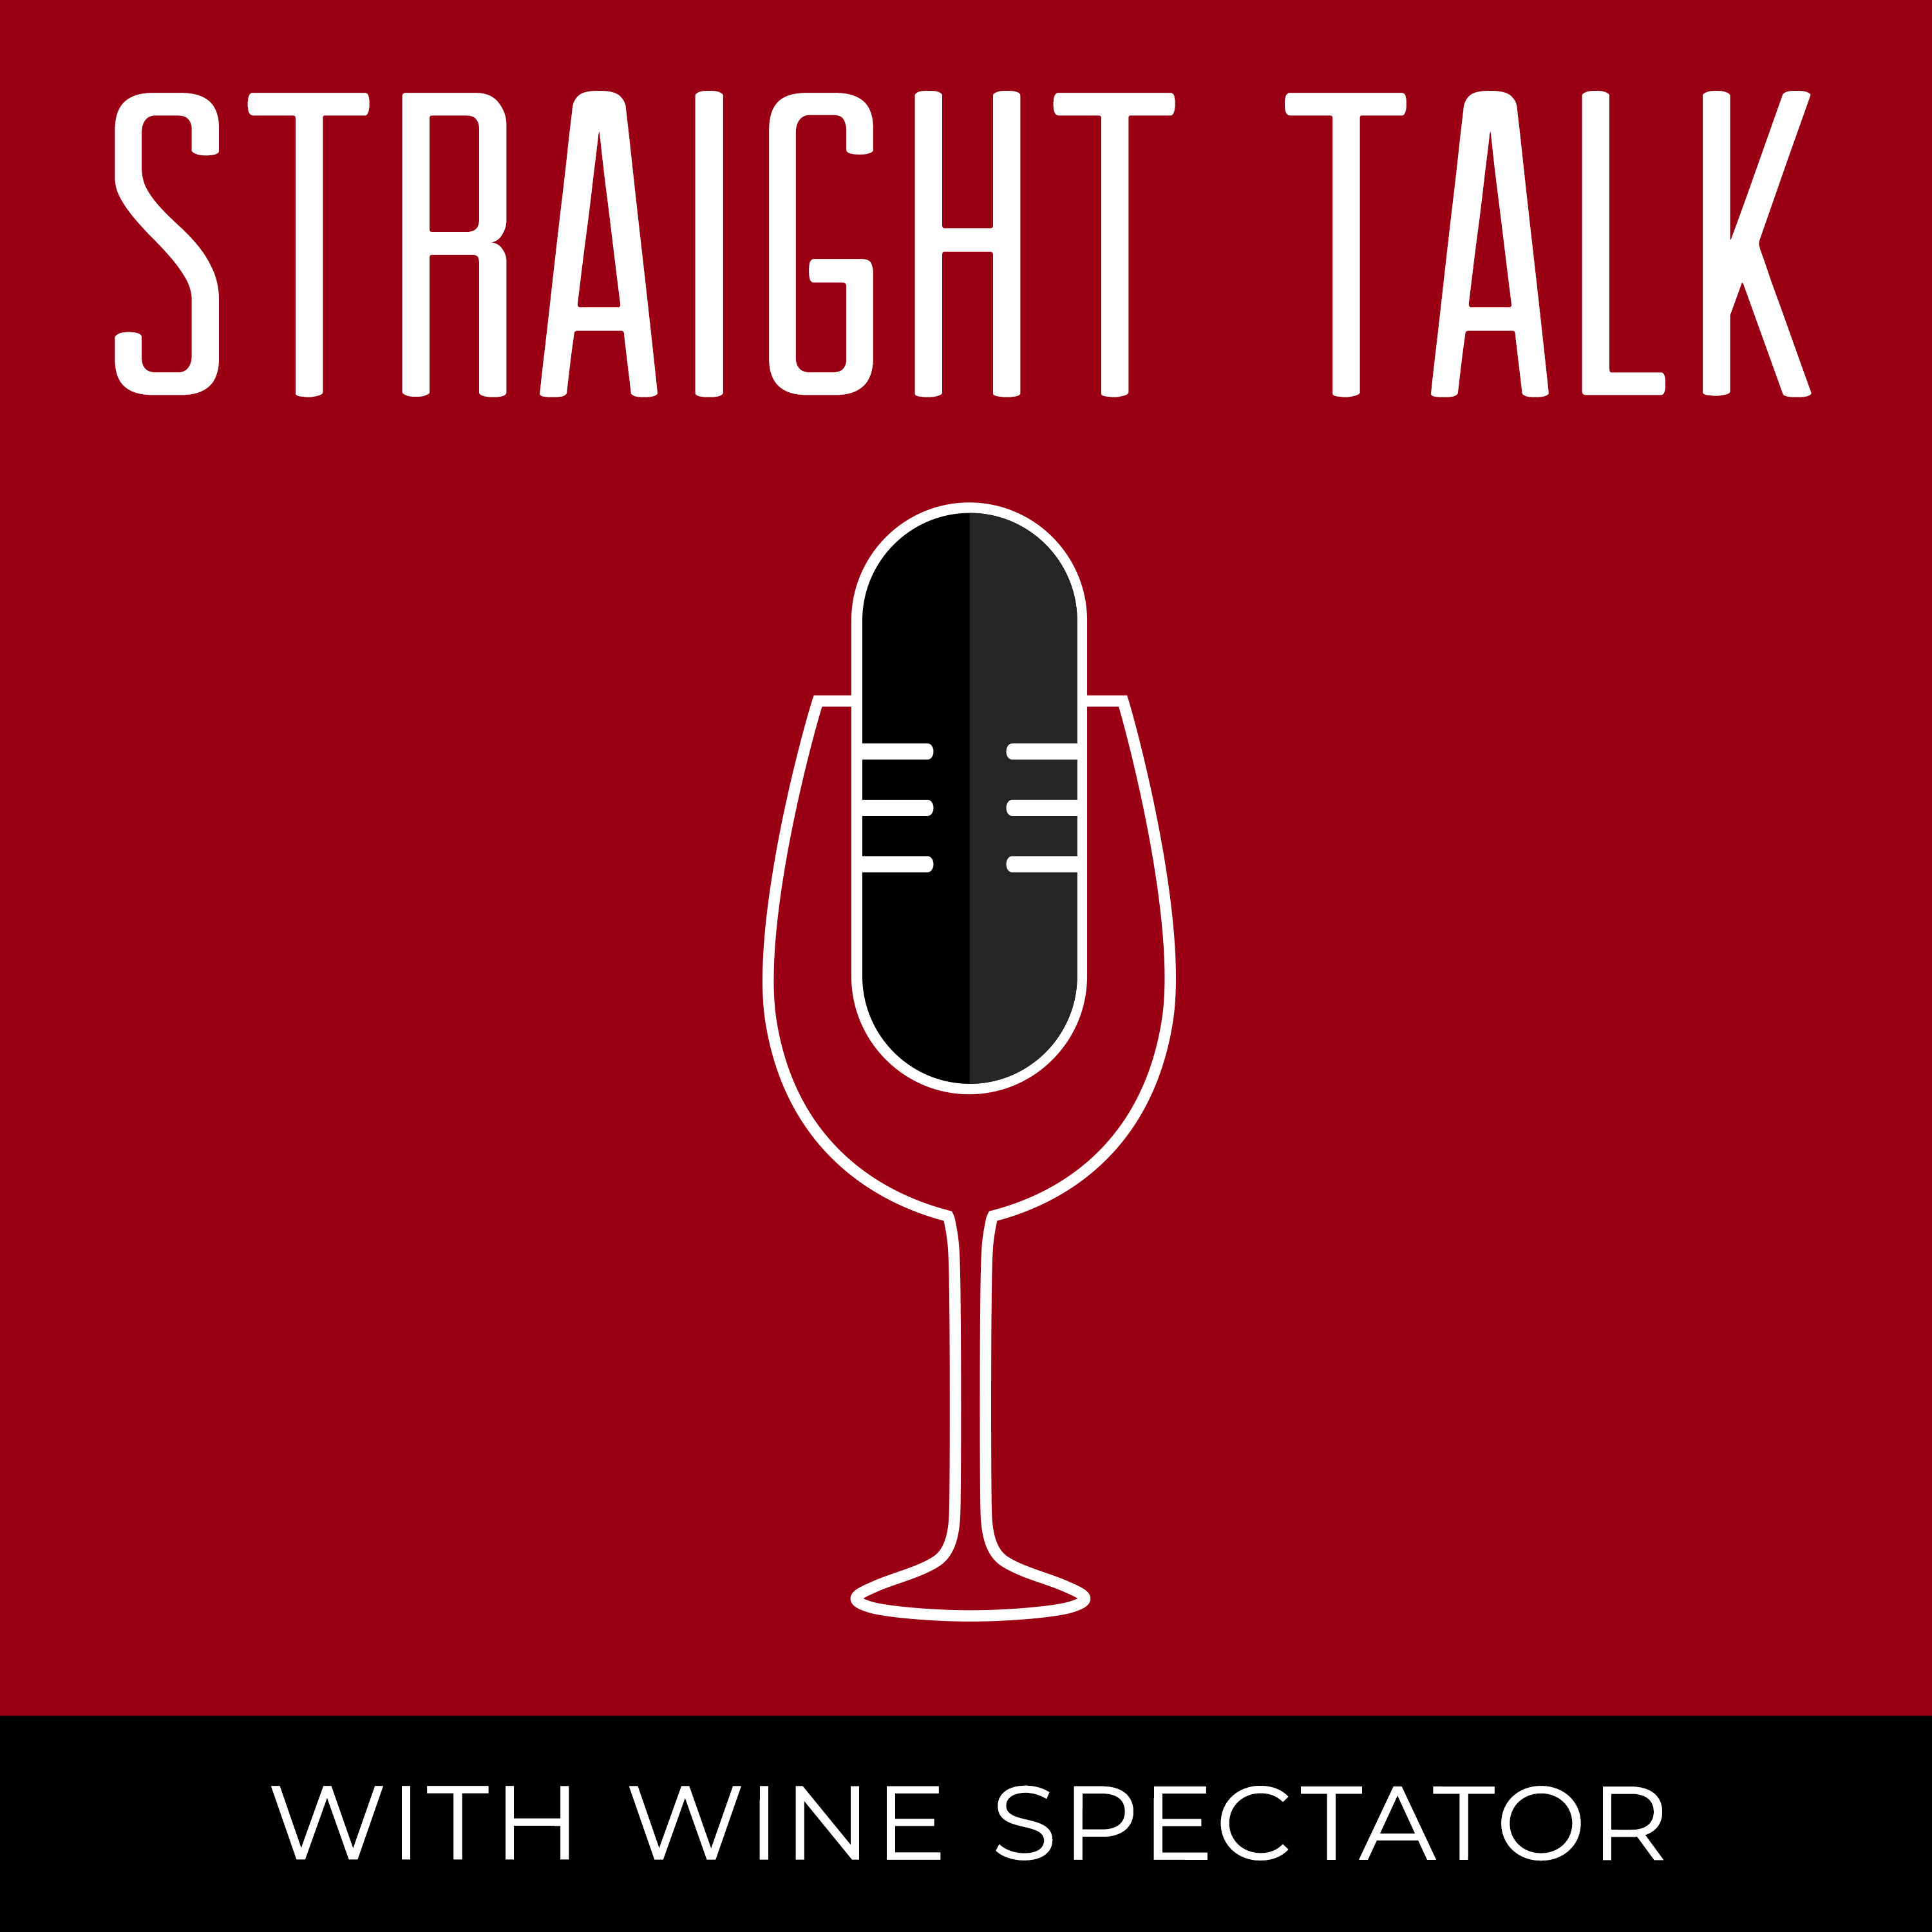 Wine Spectator logo